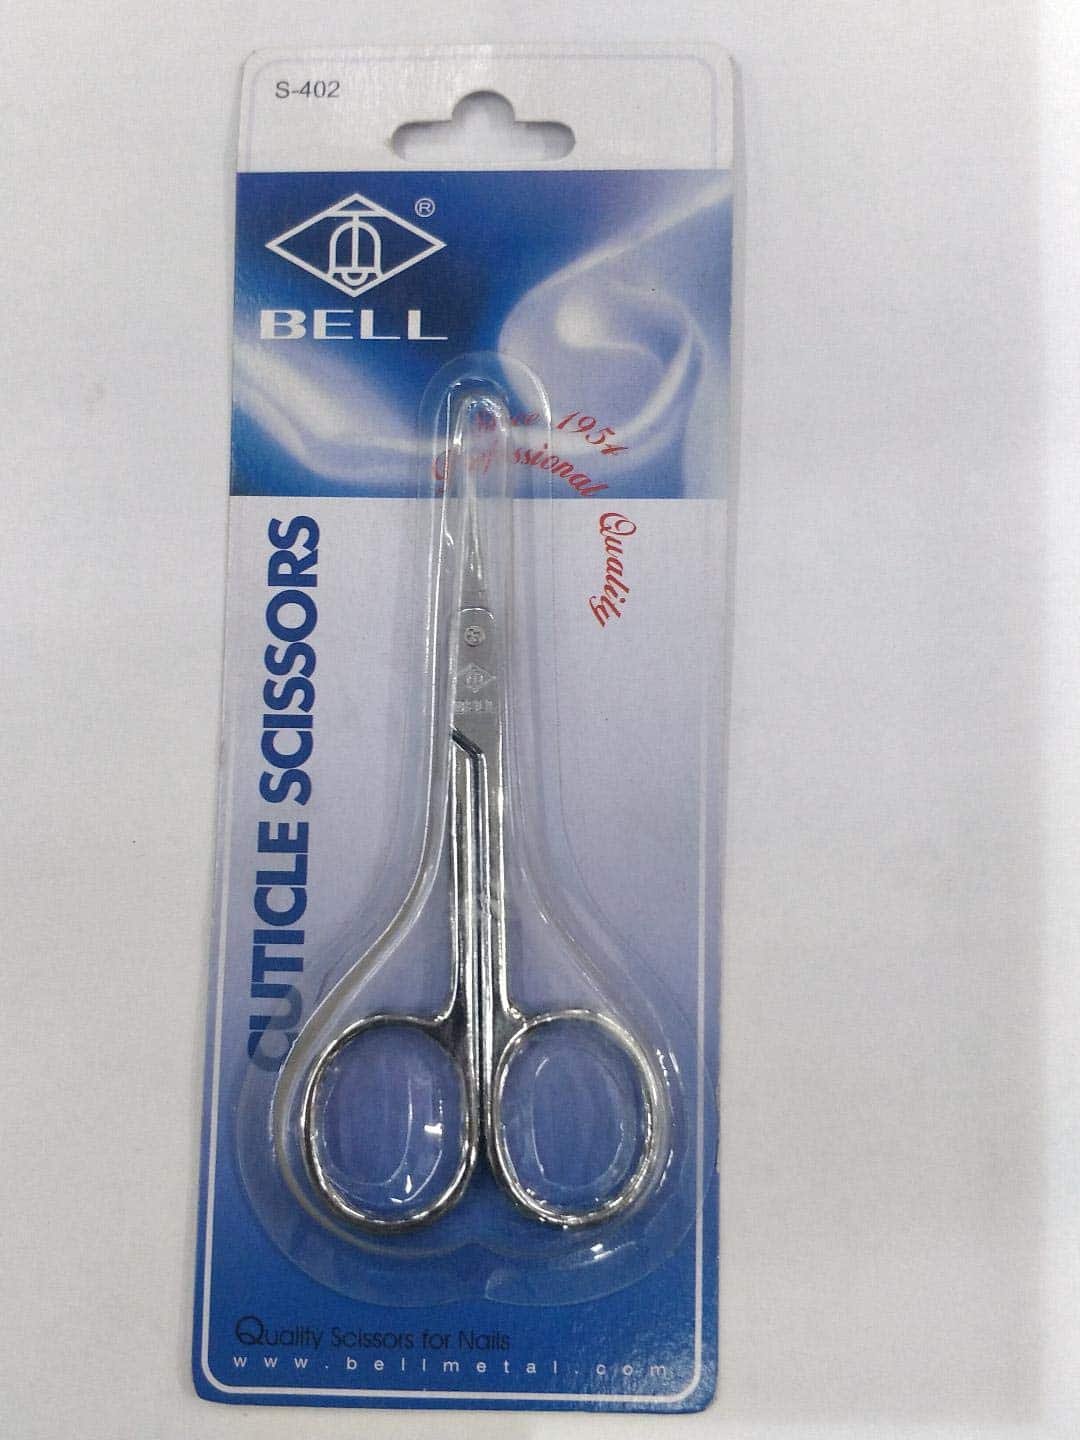 Bell Cuticle Scissors S-402